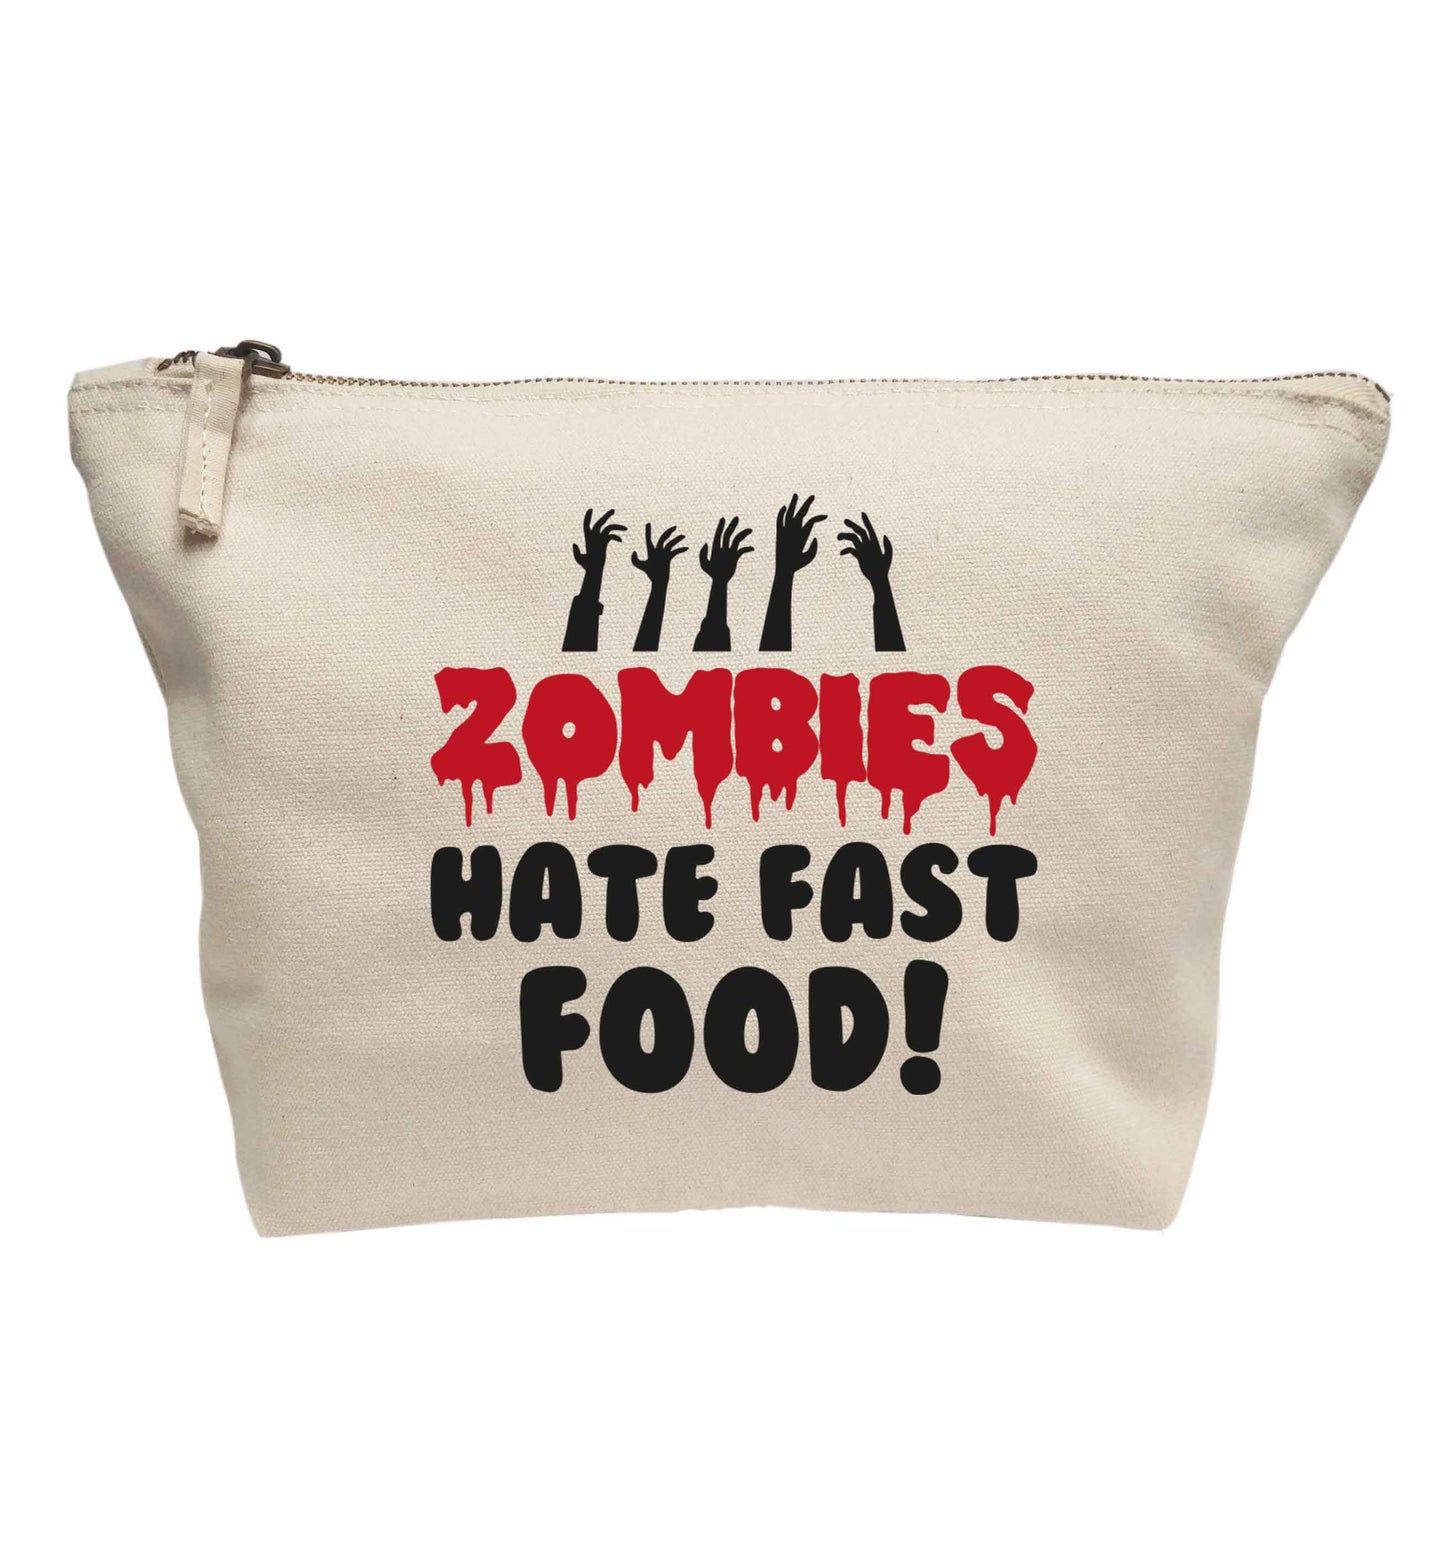 Zombies hate fast food | Makeup / wash bag